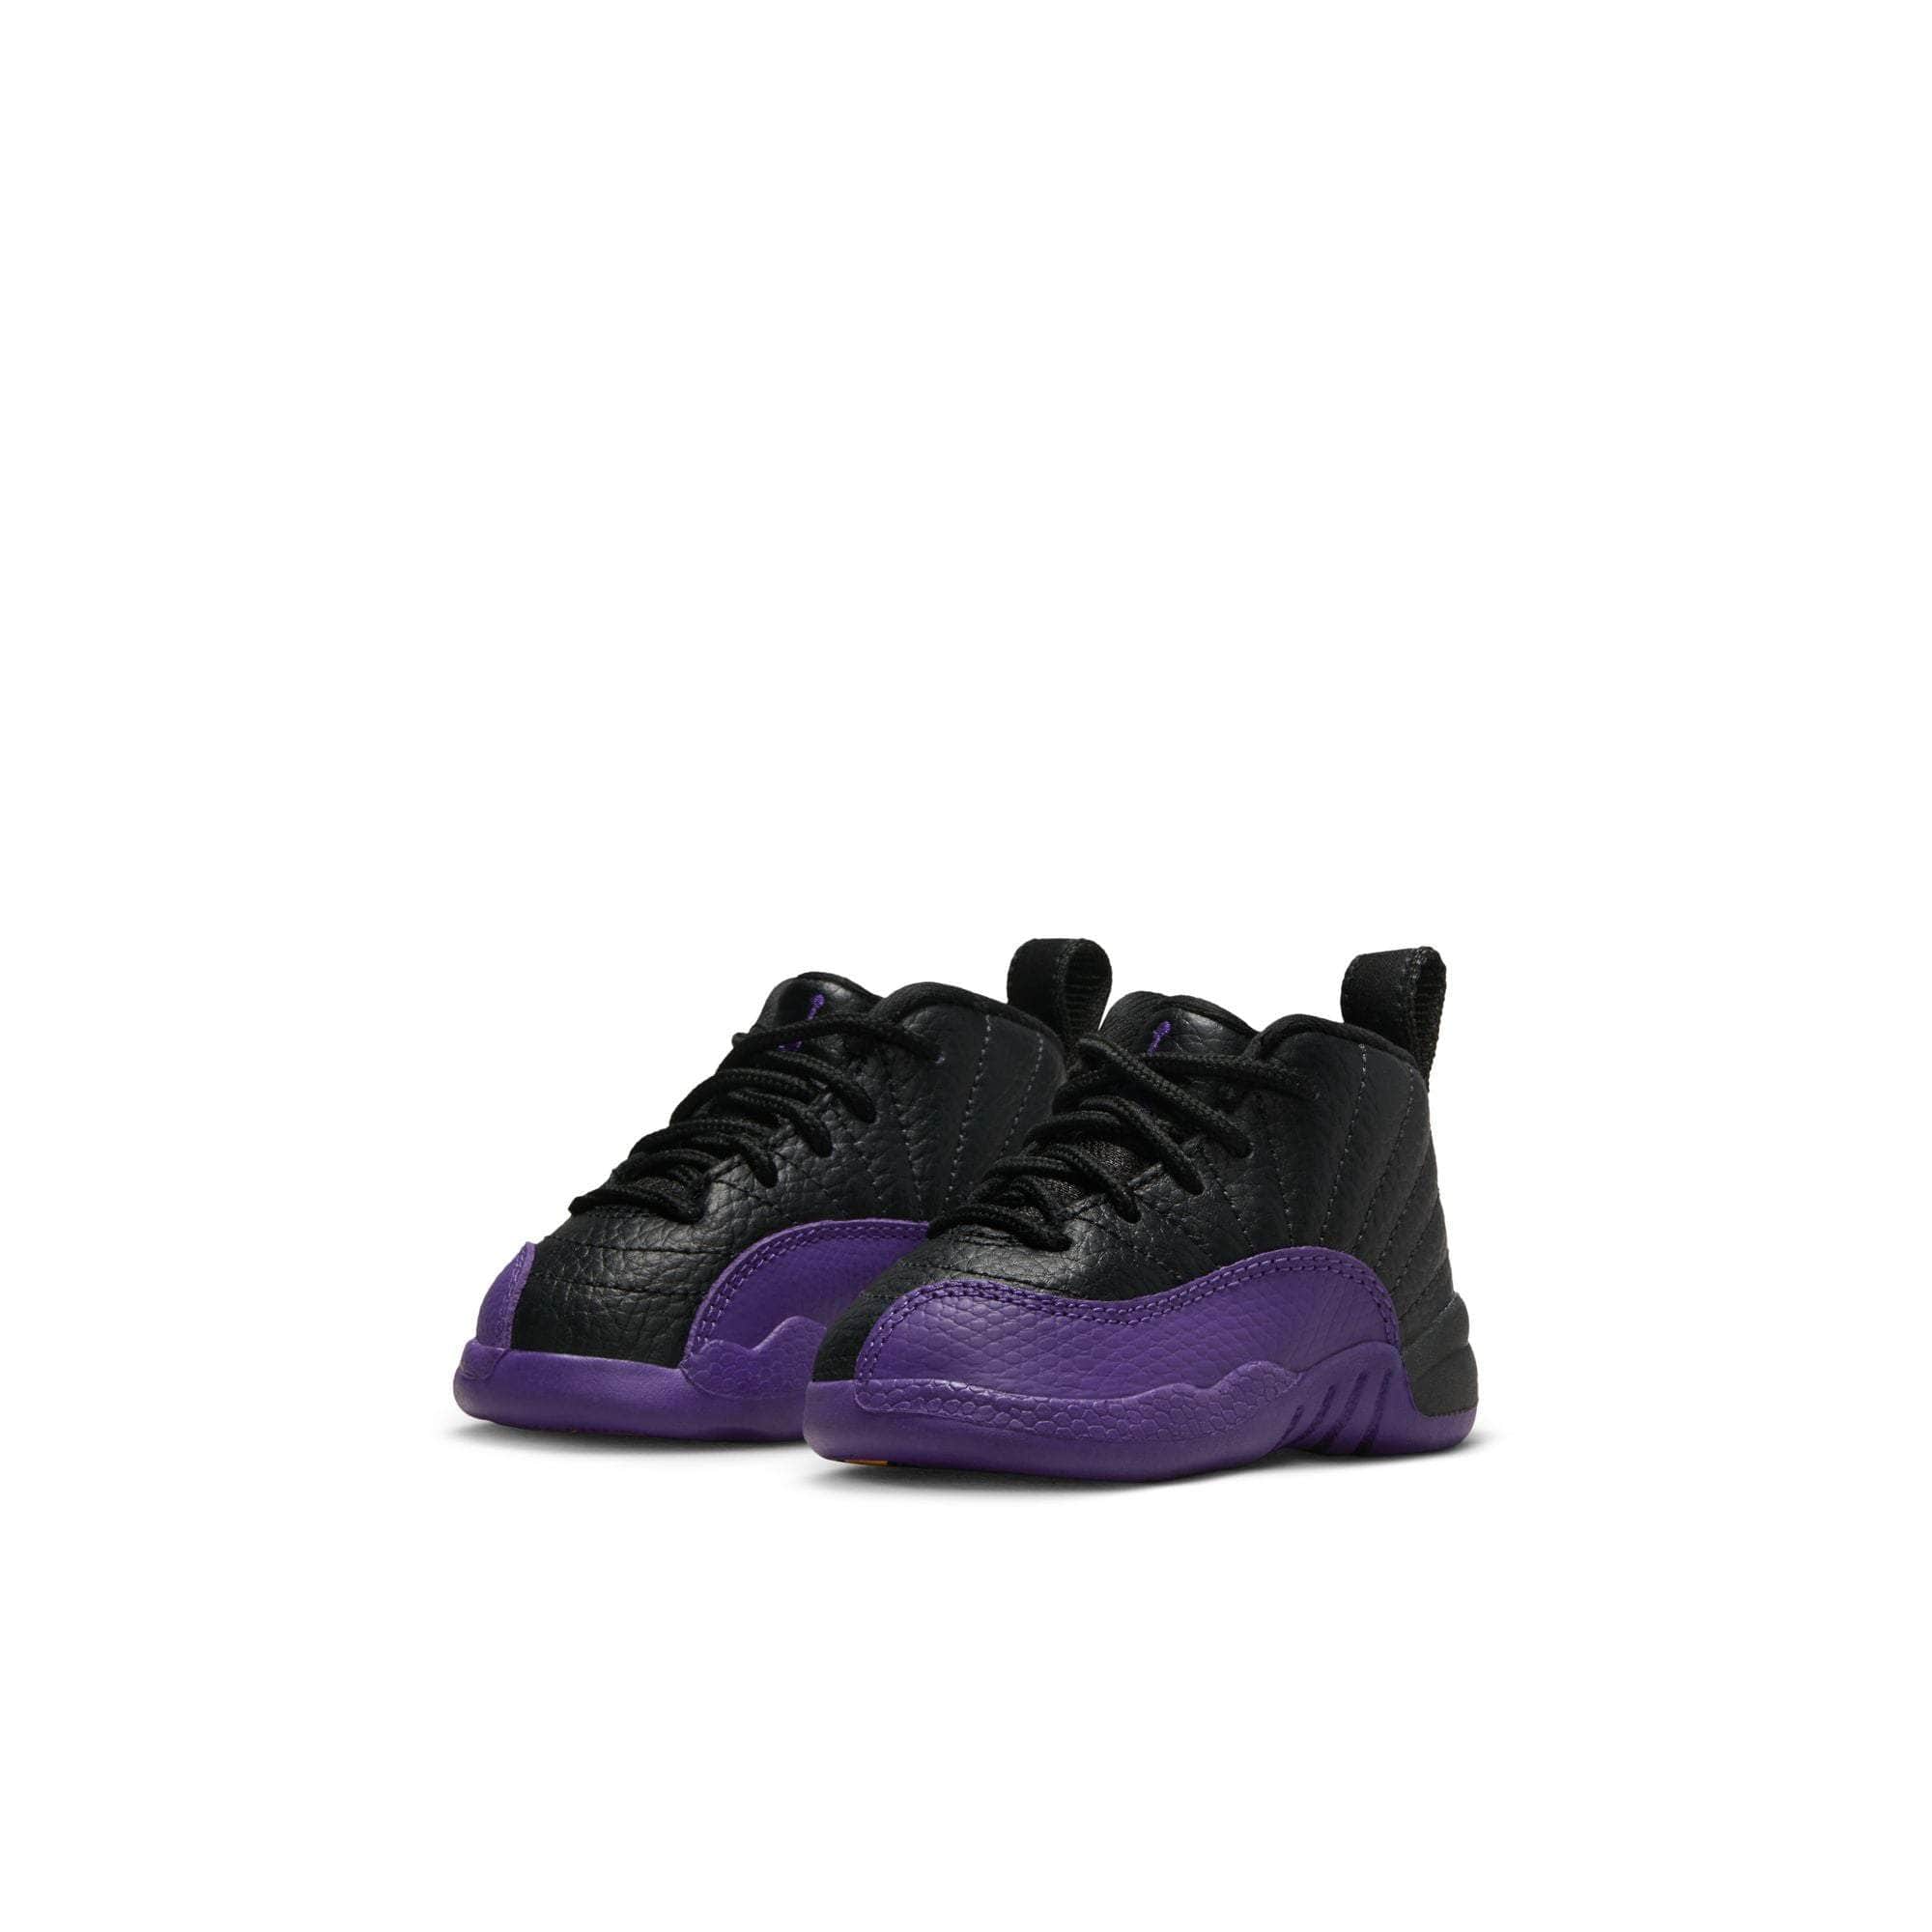 Jordan Mens Retro 7 Basketball Shoes Black/Field Purple/Fir/Dark Steel Grey Size 10.0